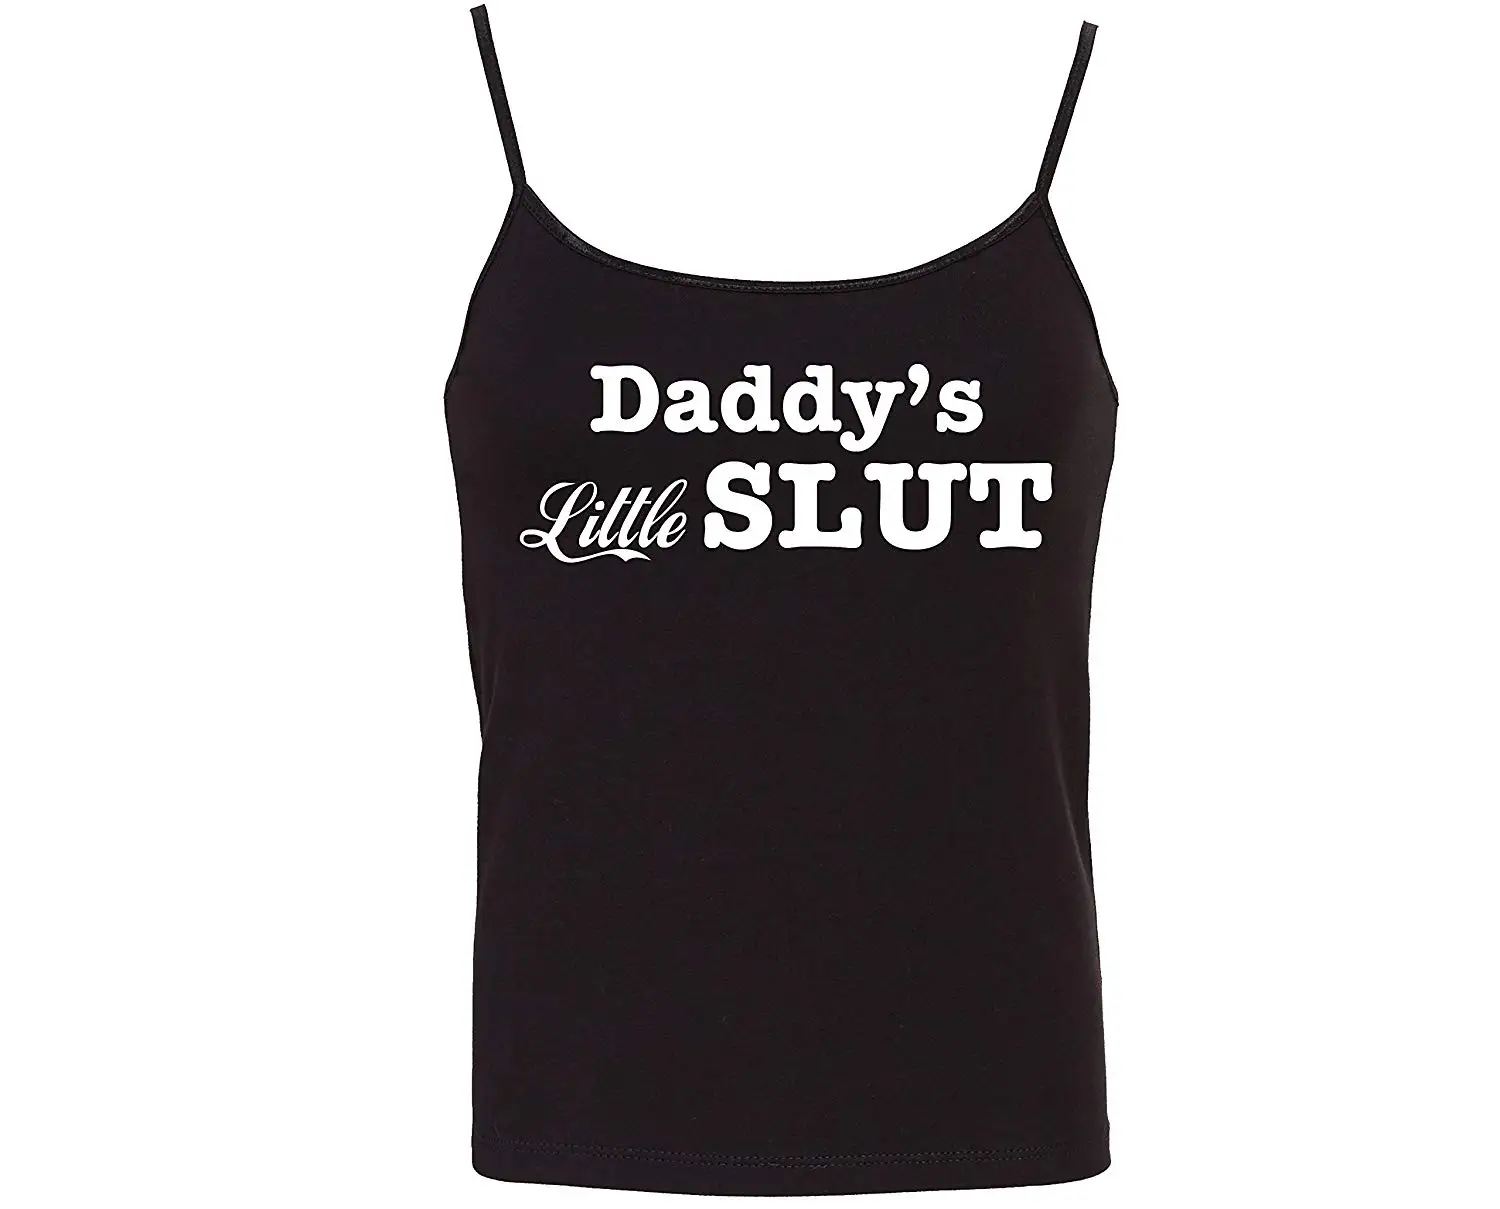 Buy Knaughty Knickers Daddys Little Slut Fun Flirty Camisole Cami Tank Top Sleep Wear Fitted